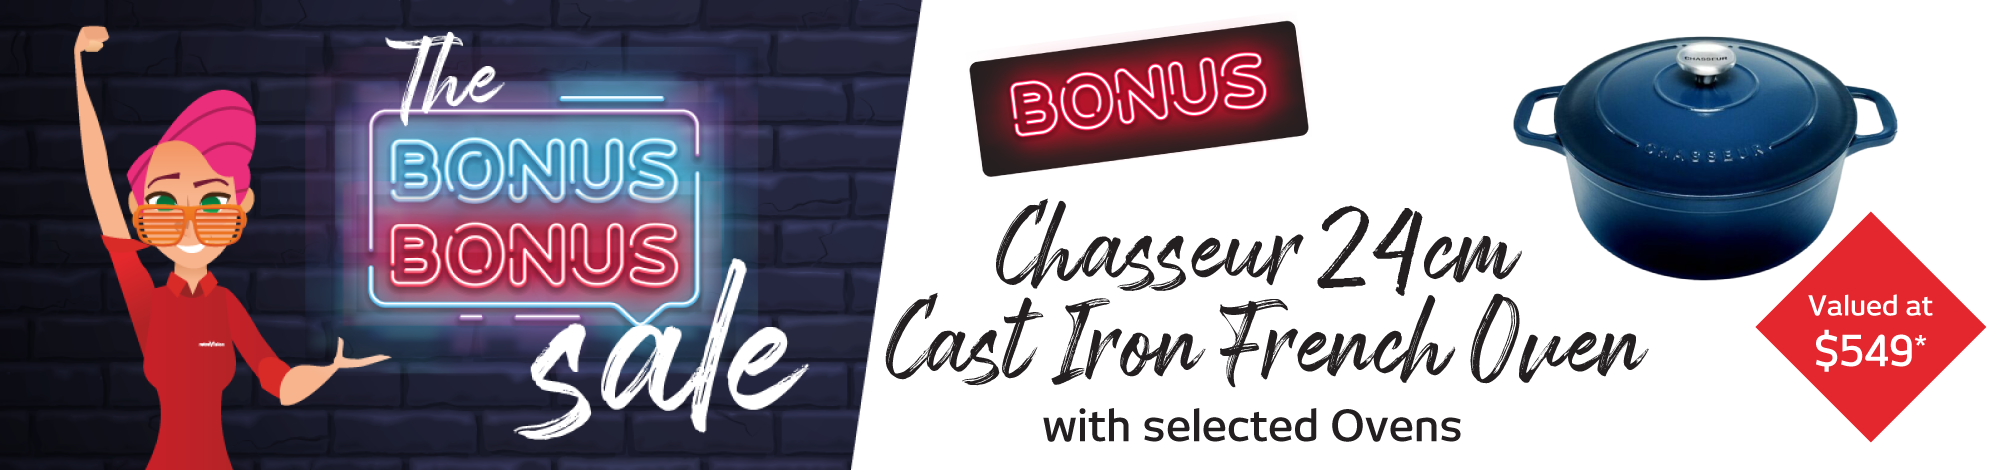 Bonus Chasseur 24cm Cast Iron French Oven